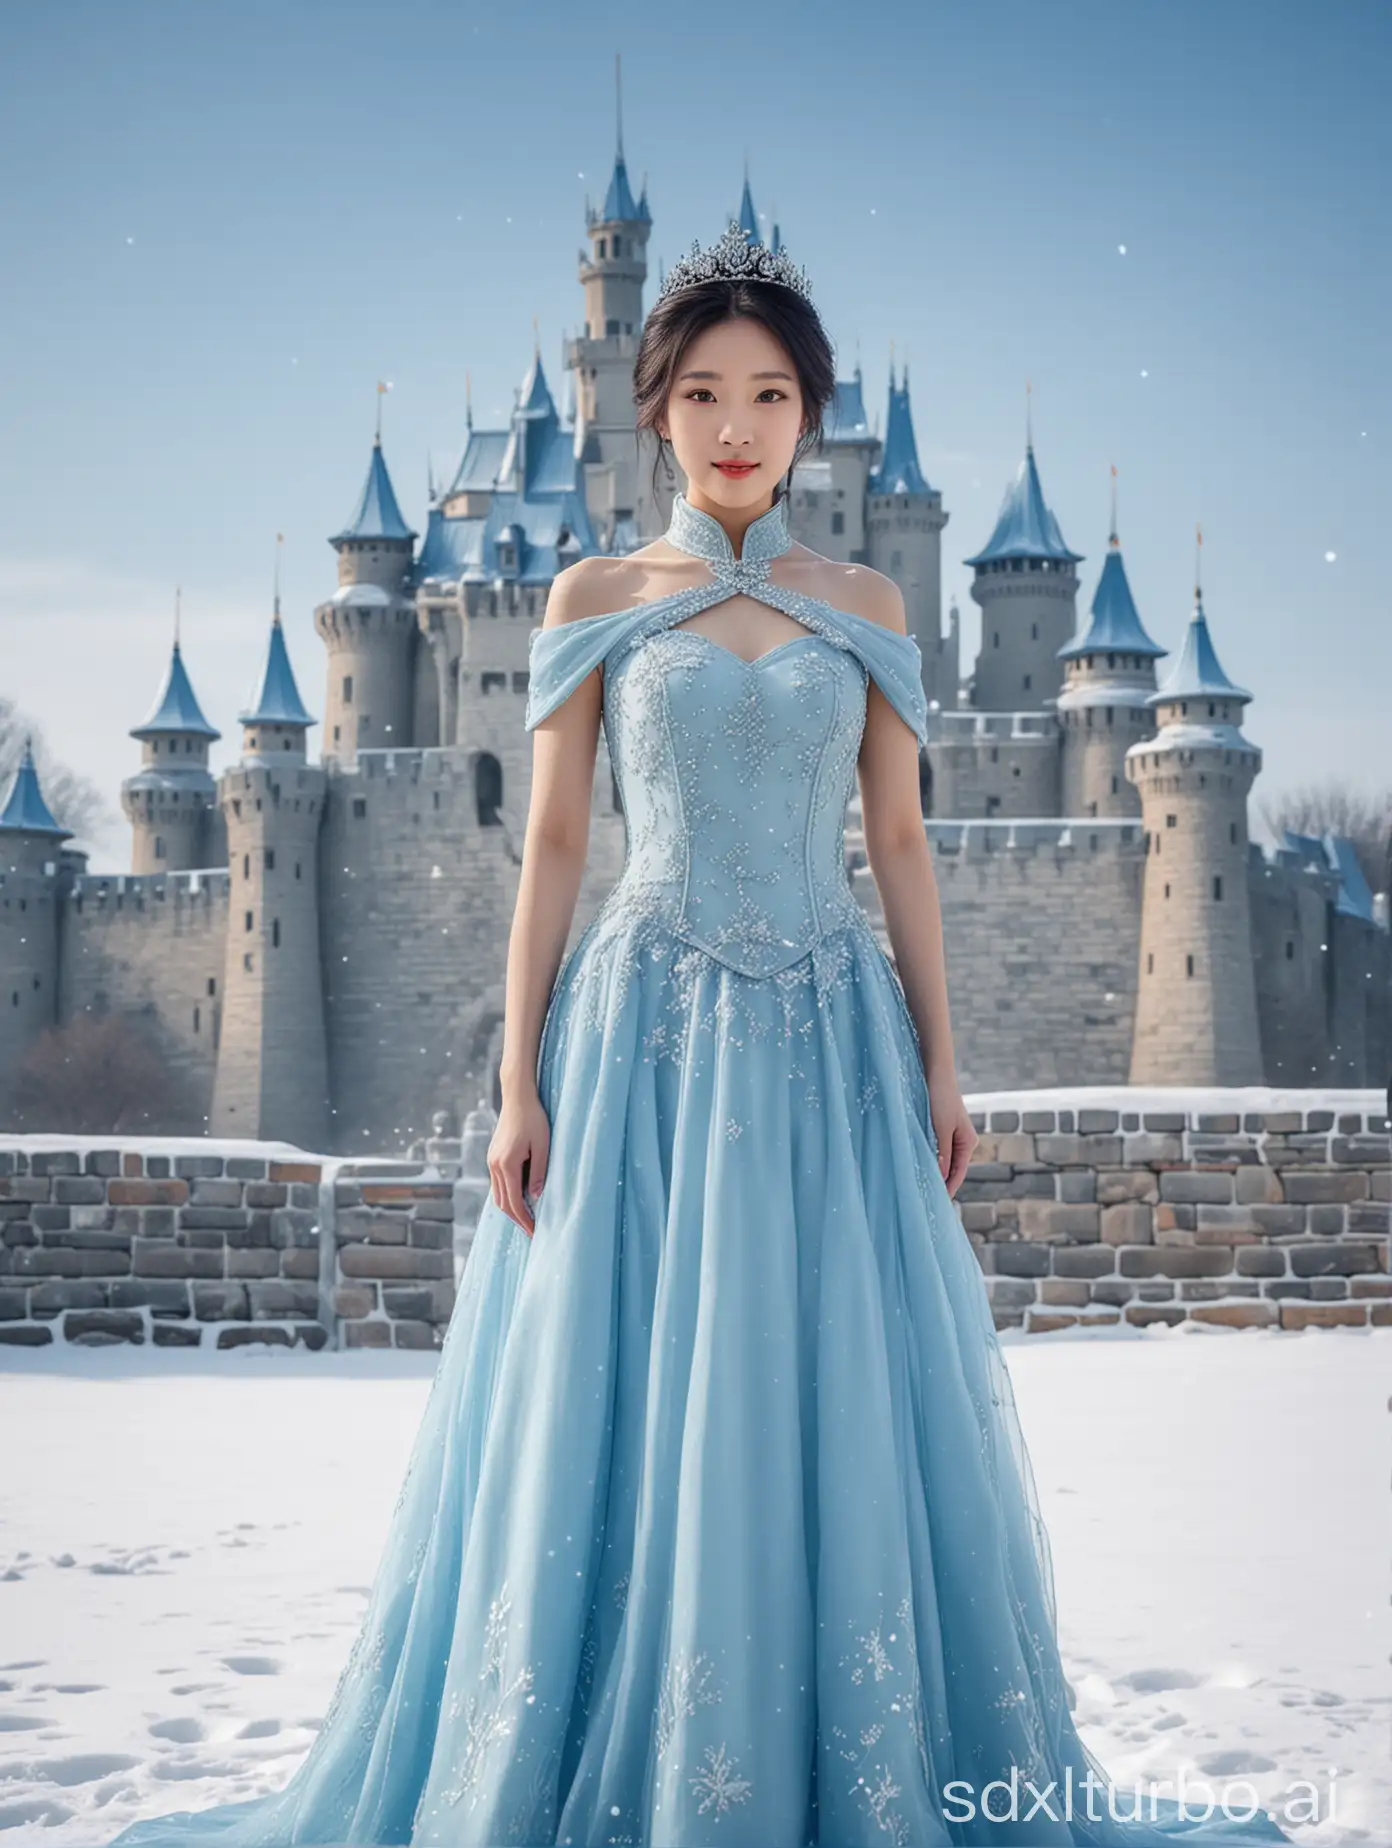 Chinese-Princess-in-Snowy-Castle-Elegant-Girl-in-Blue-Dress-Amidst-Winter-Wonderland